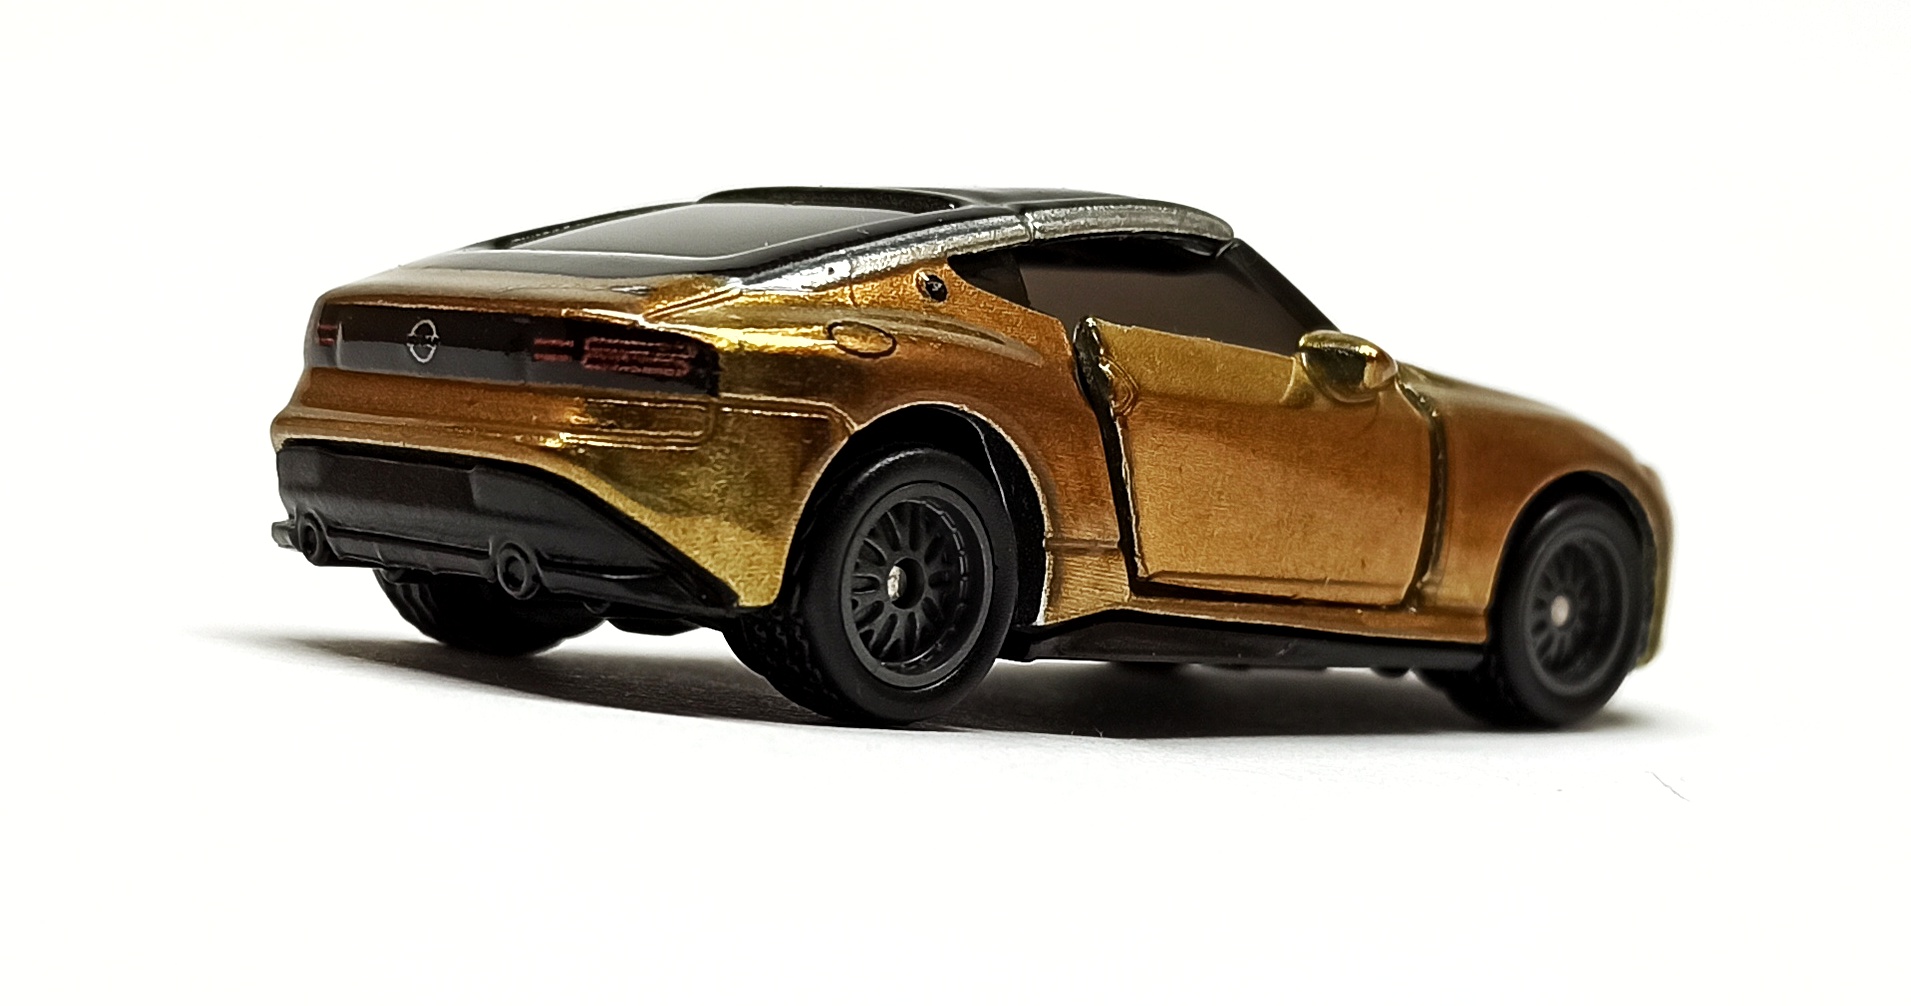 Nissan Z Proto (GRJ39) 2022 Mattel Creations Matchbox Collectors Exclusive gold (chrome chartreuse)